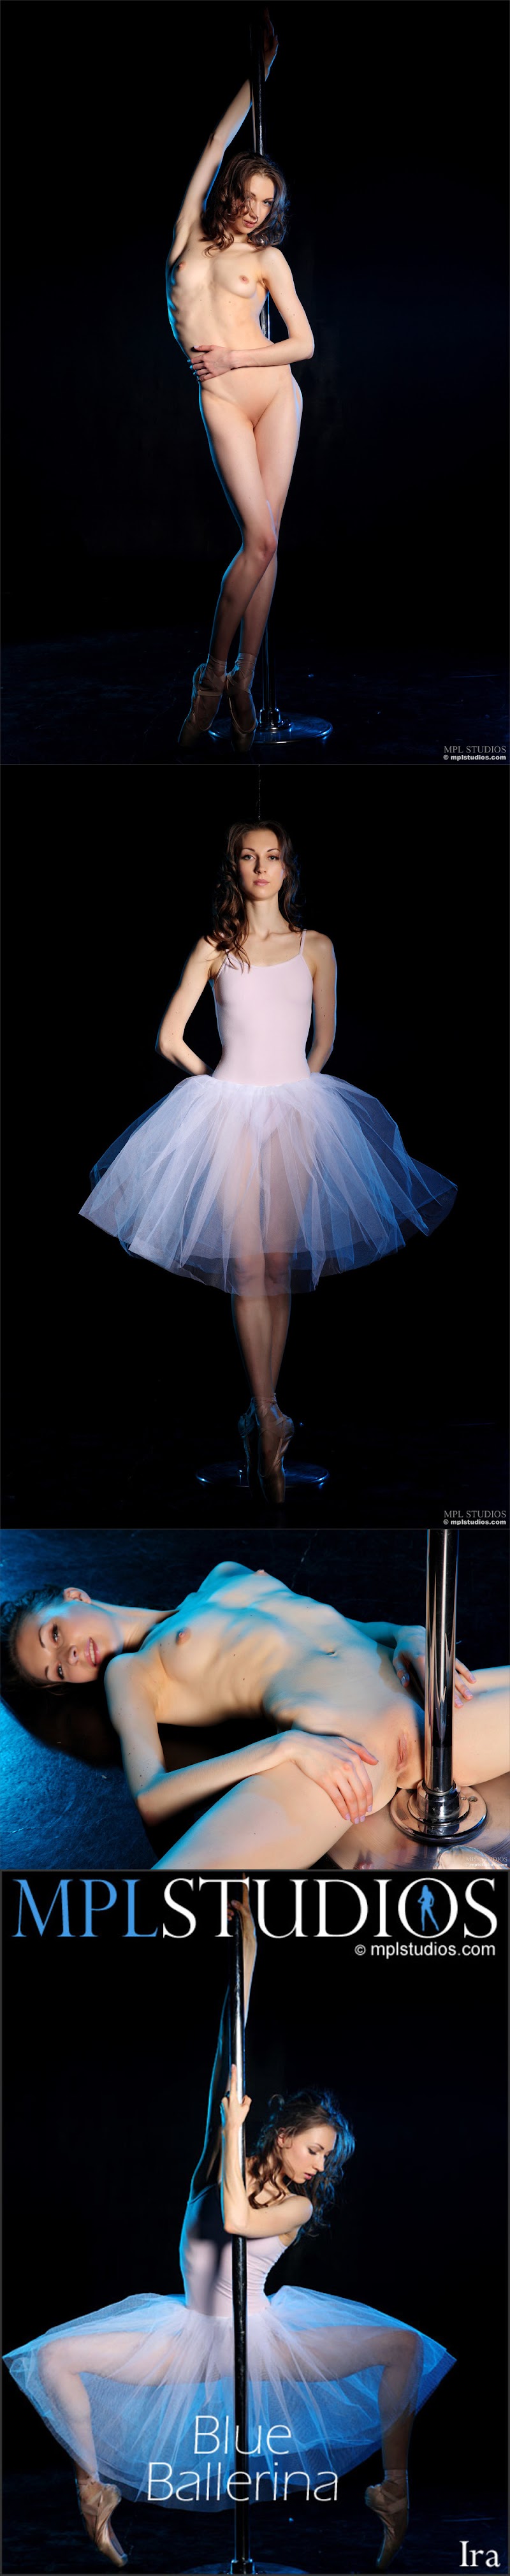 mplstudios_2014-01-09_-_ira_-_blue_ballerina.zip-jk- mplstudios 2014-01-09 - ira - blue ballerina